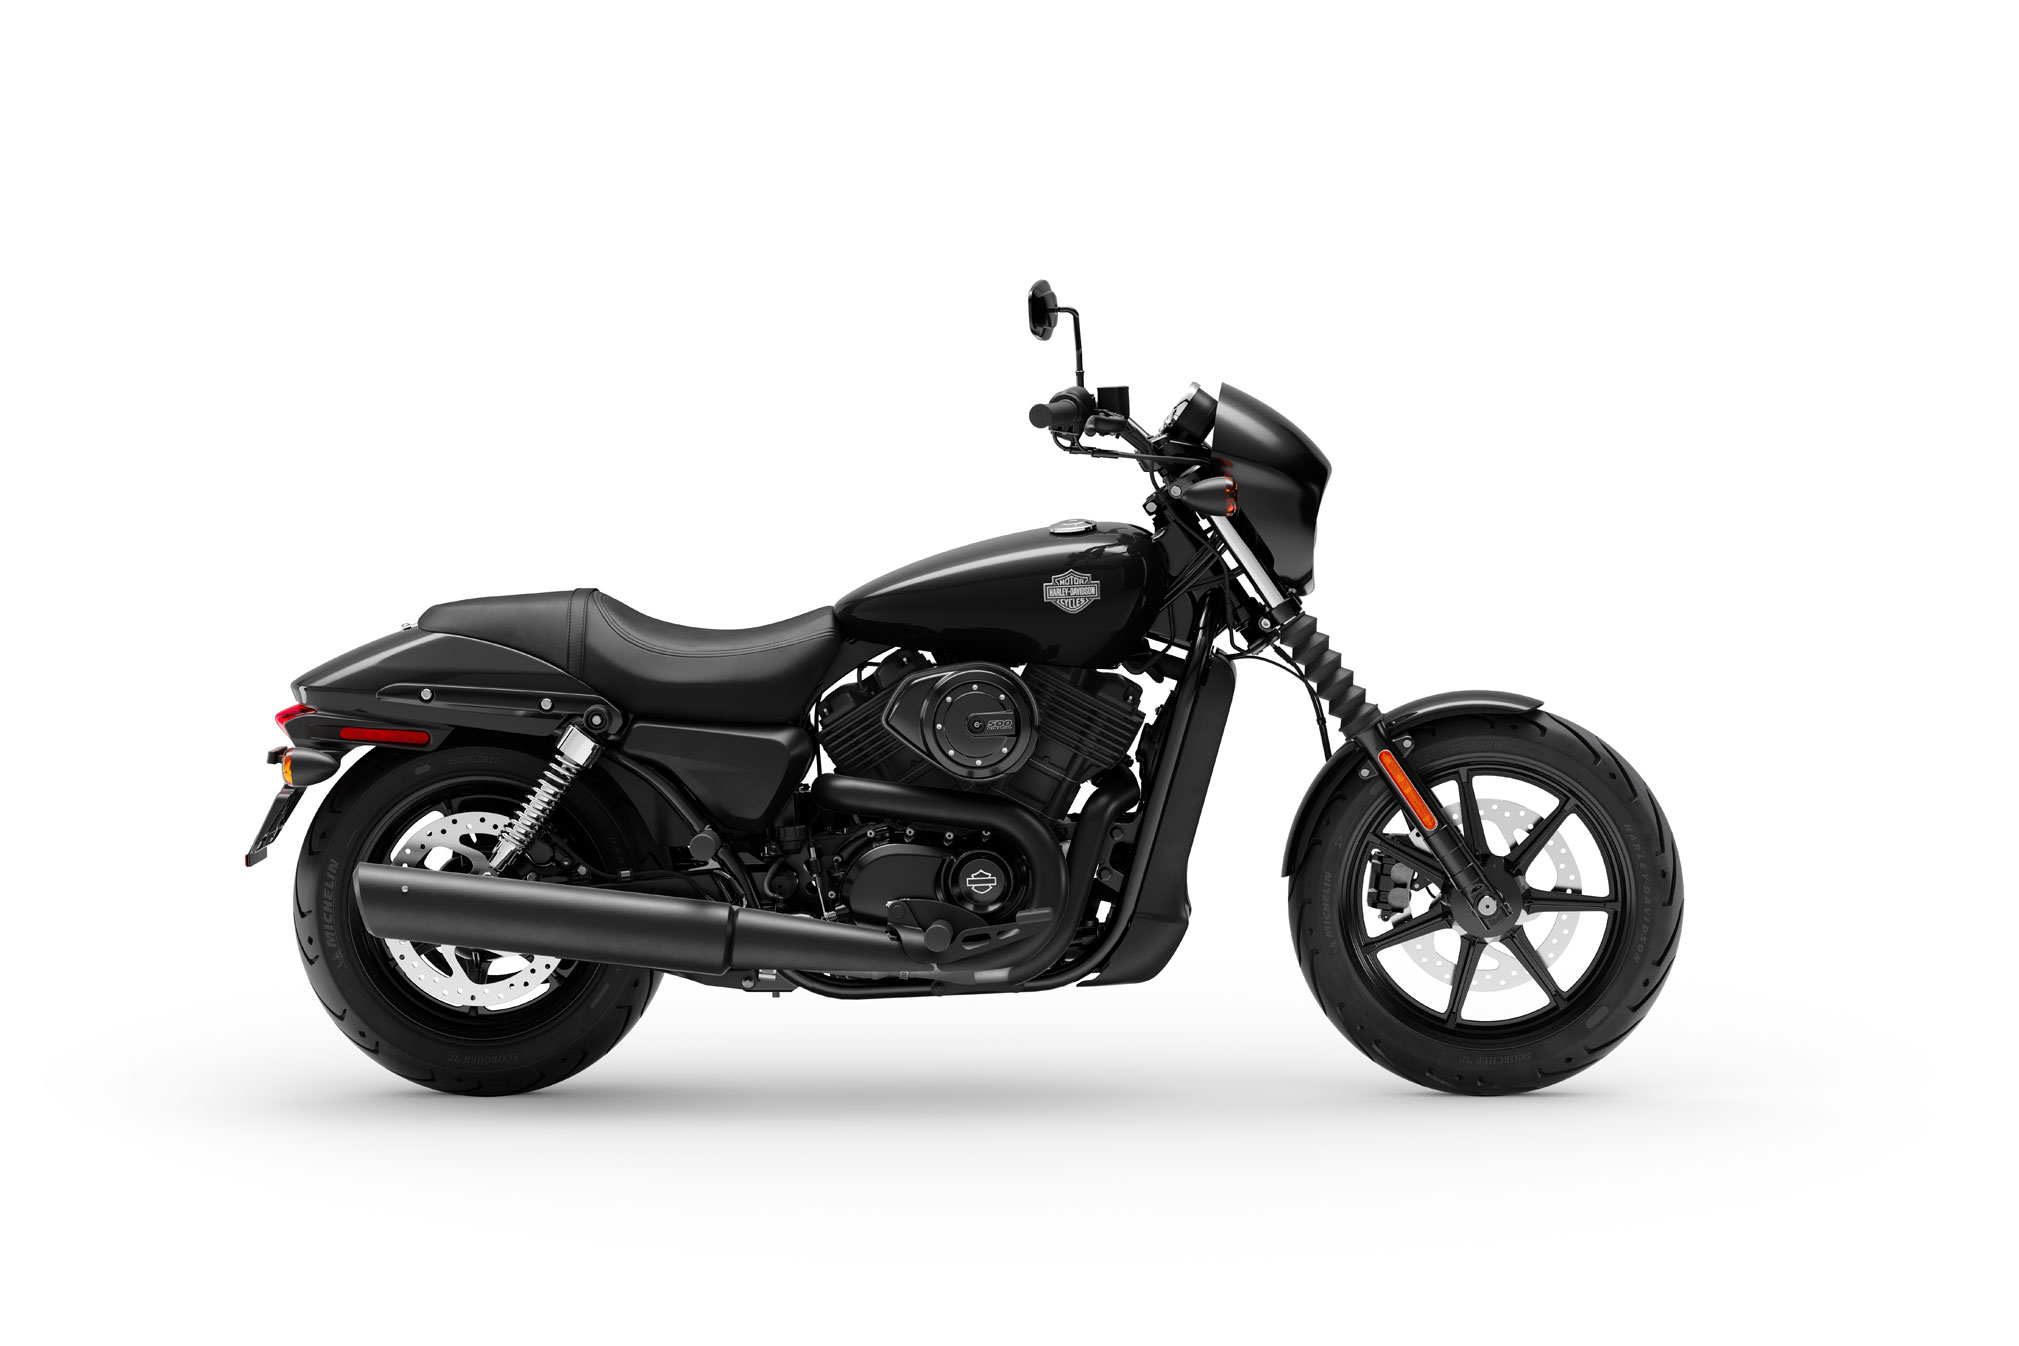 2019 Harley  Davidson  Street  500  Guide  Total Motorcycle